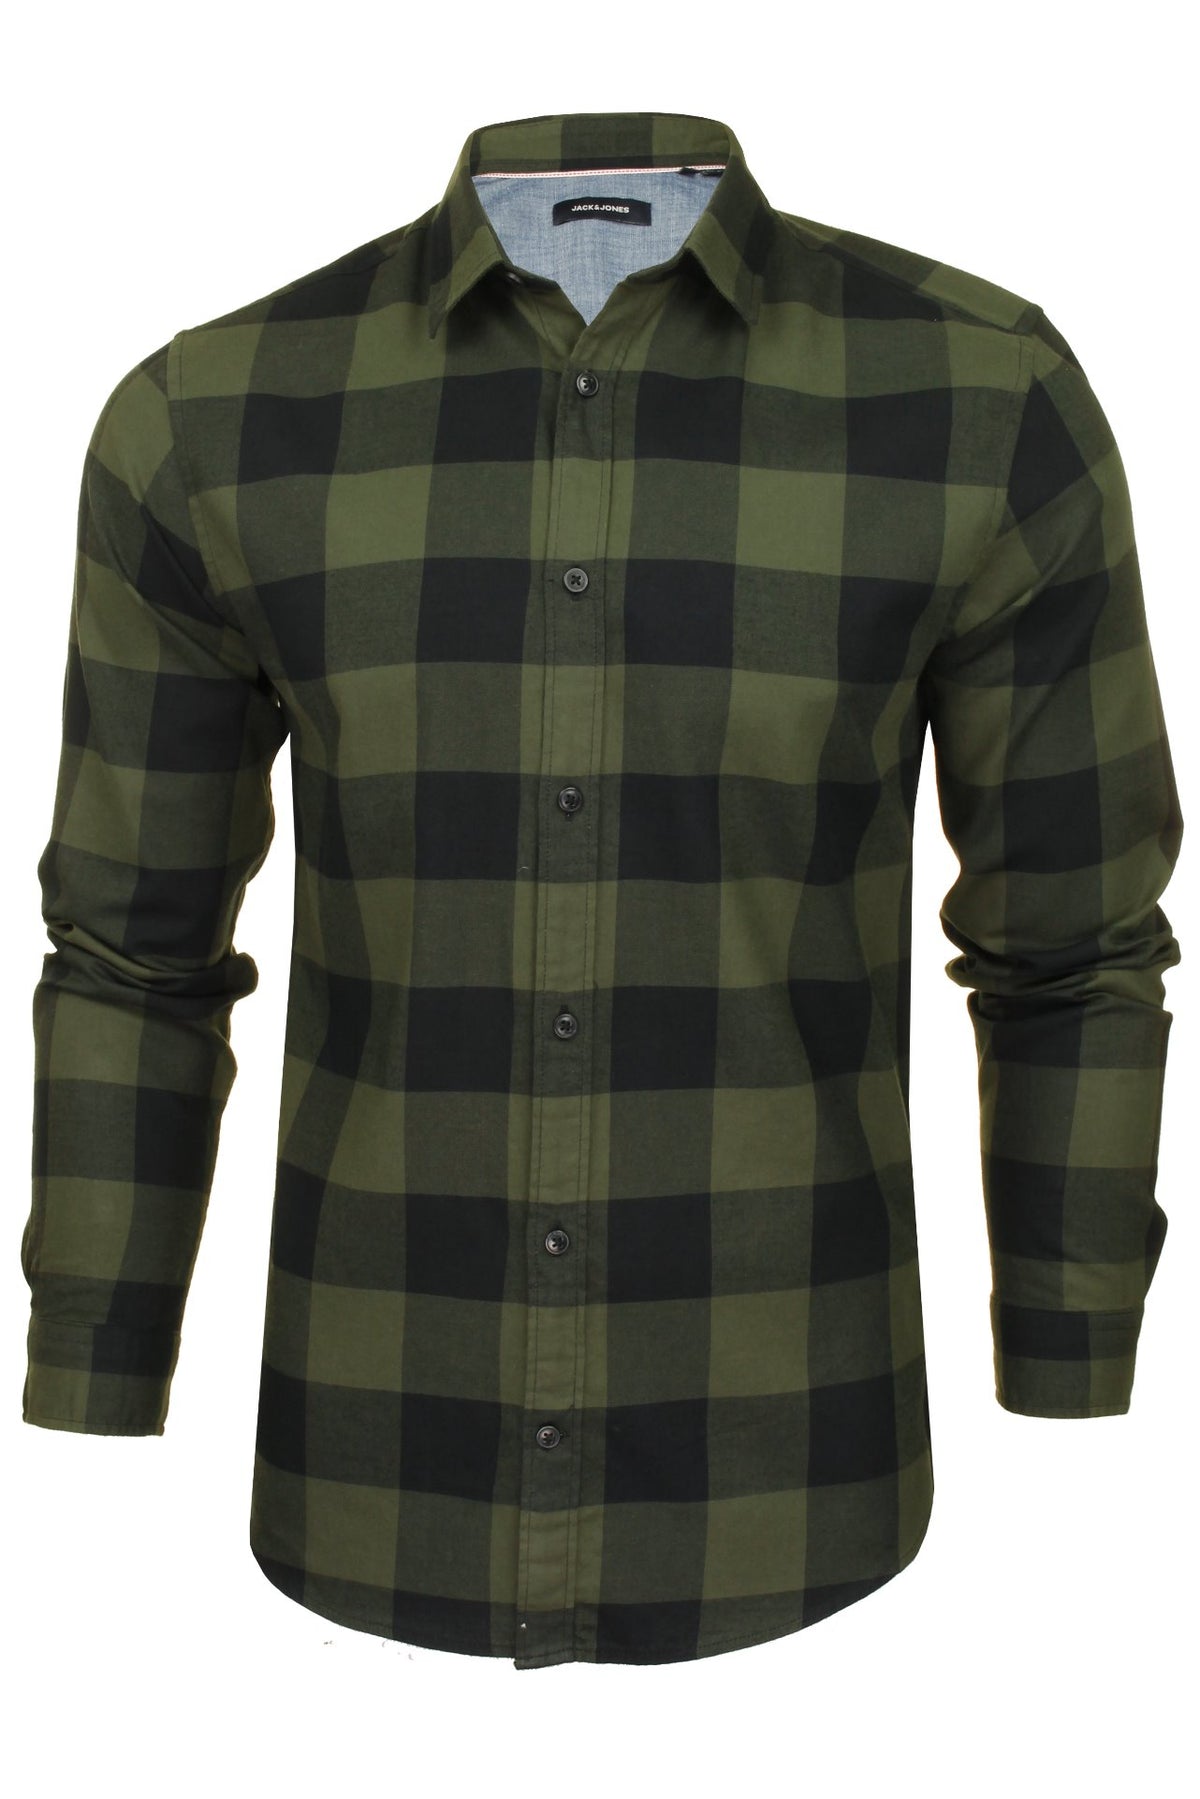 Jack & Jones Men's 'Gingham' Check Twill Shirt - Long Sleeved, 01, 12181602, Dusty Olive